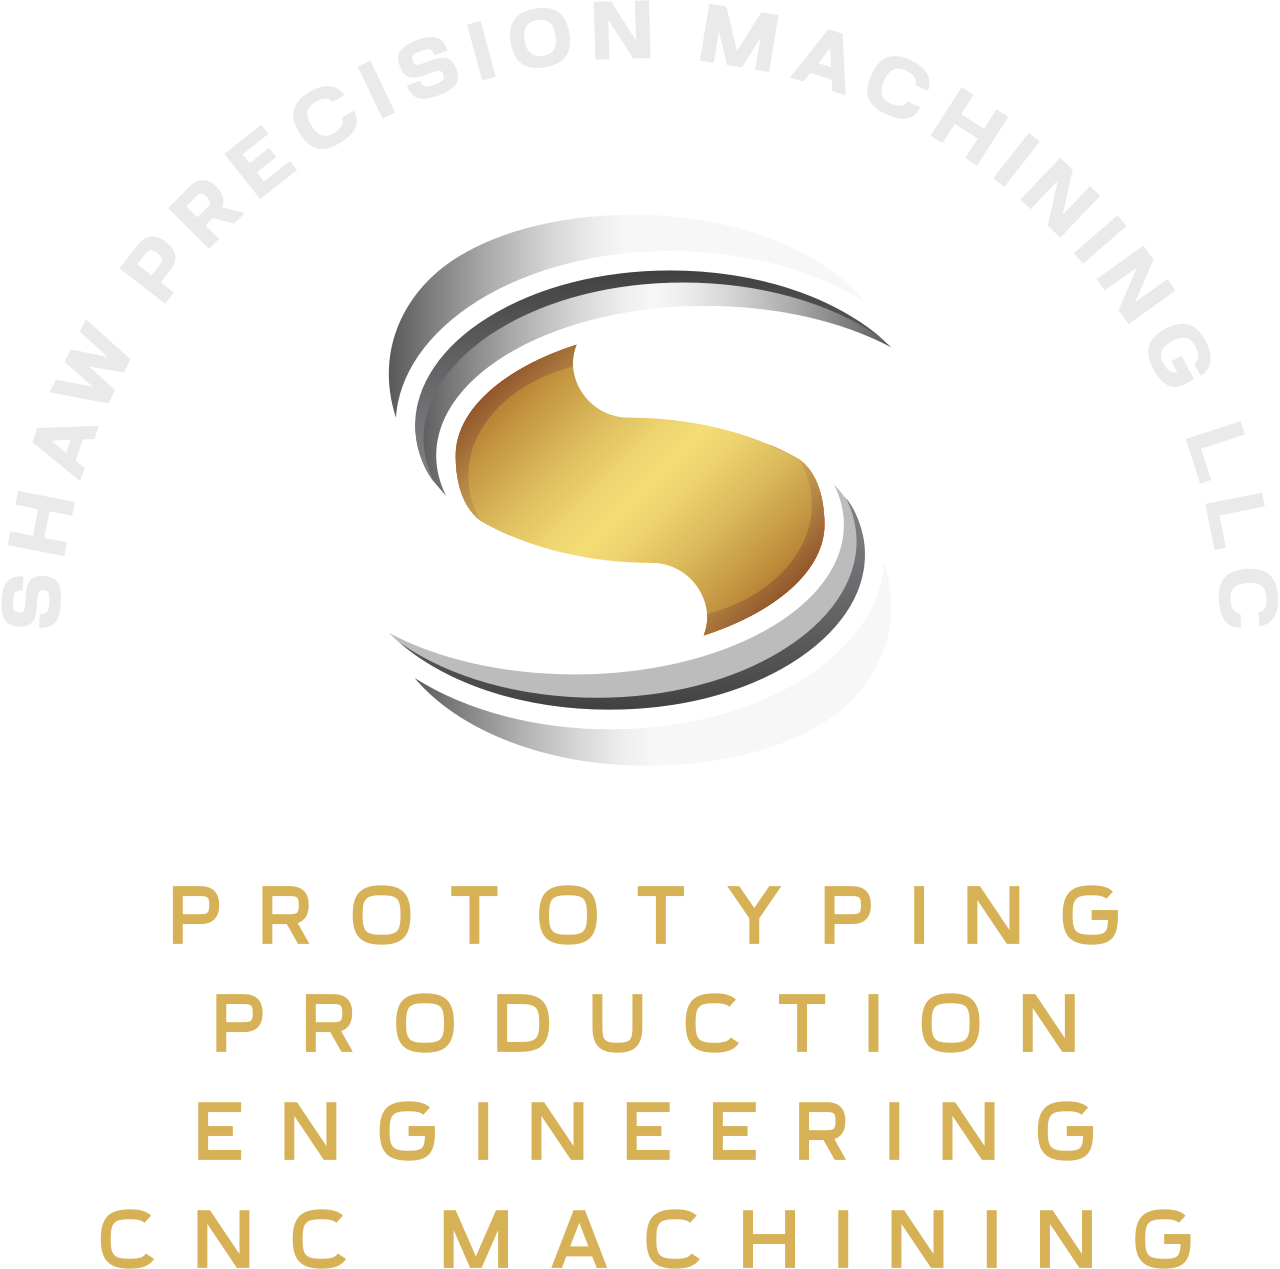 SHAW PRECISION MACHINING LLC's logo